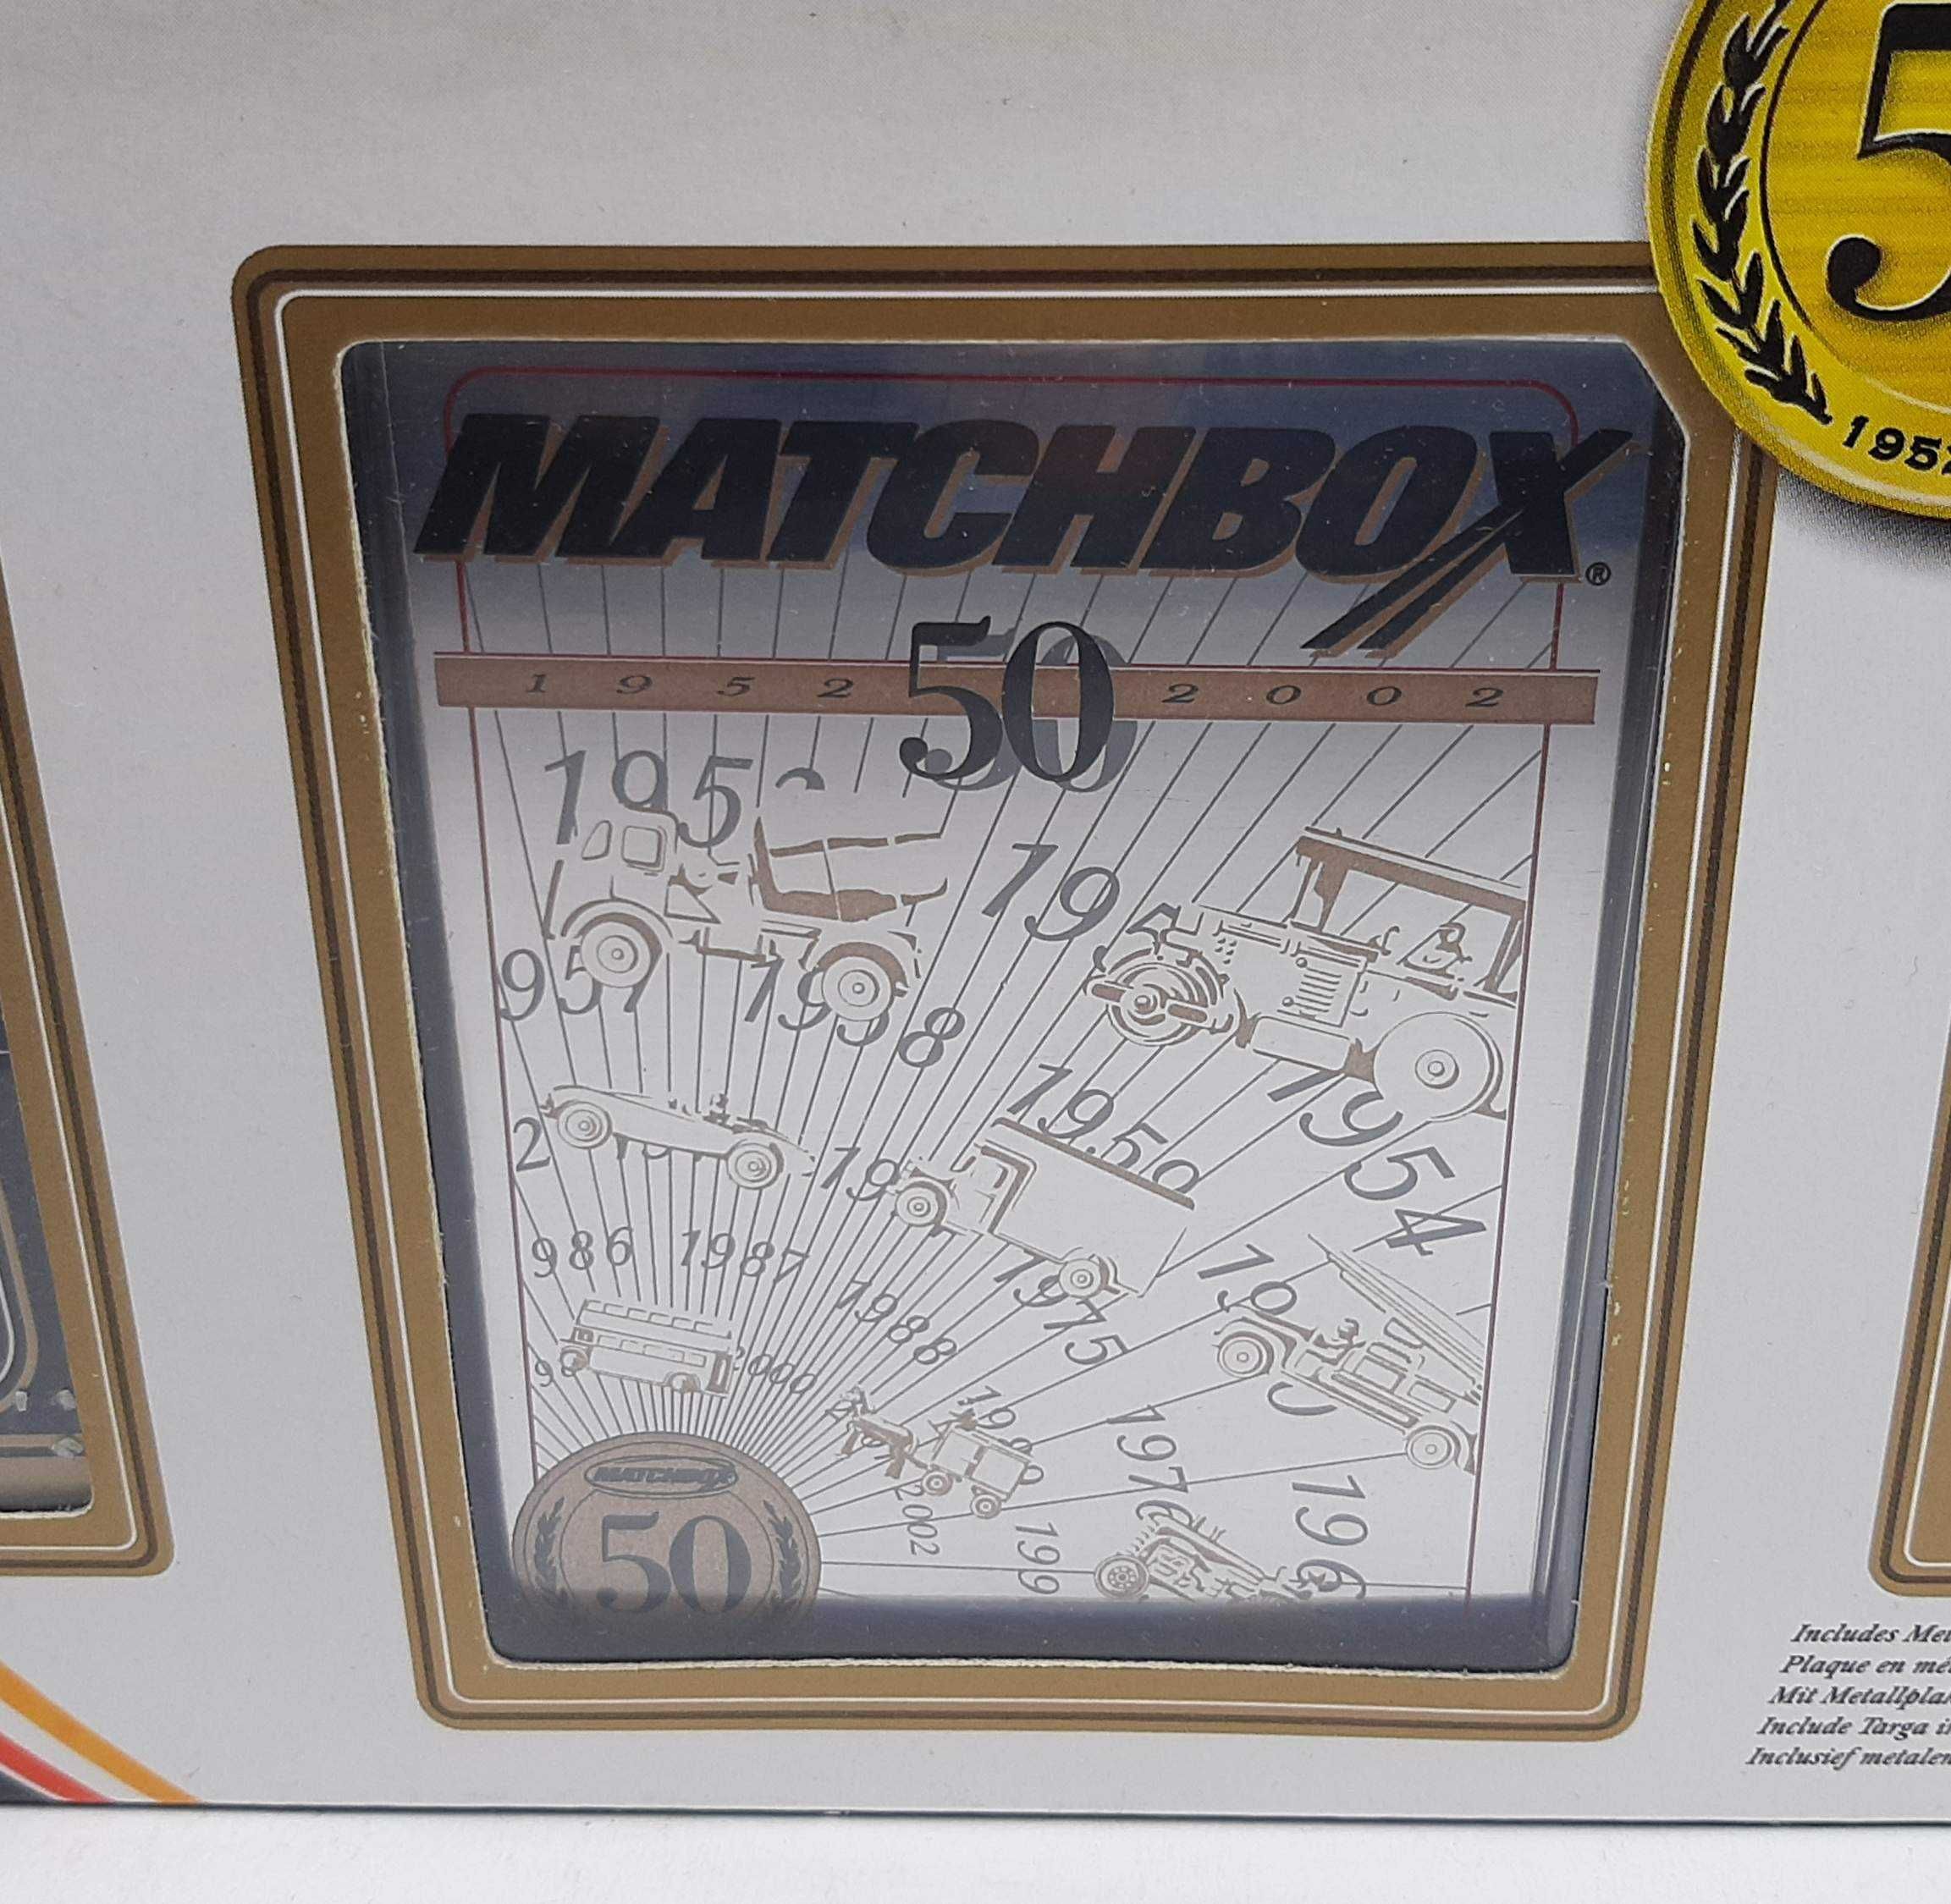 MATCHBOX Collectibles 50th Anniversary, zestaw na 50 lecie firmy